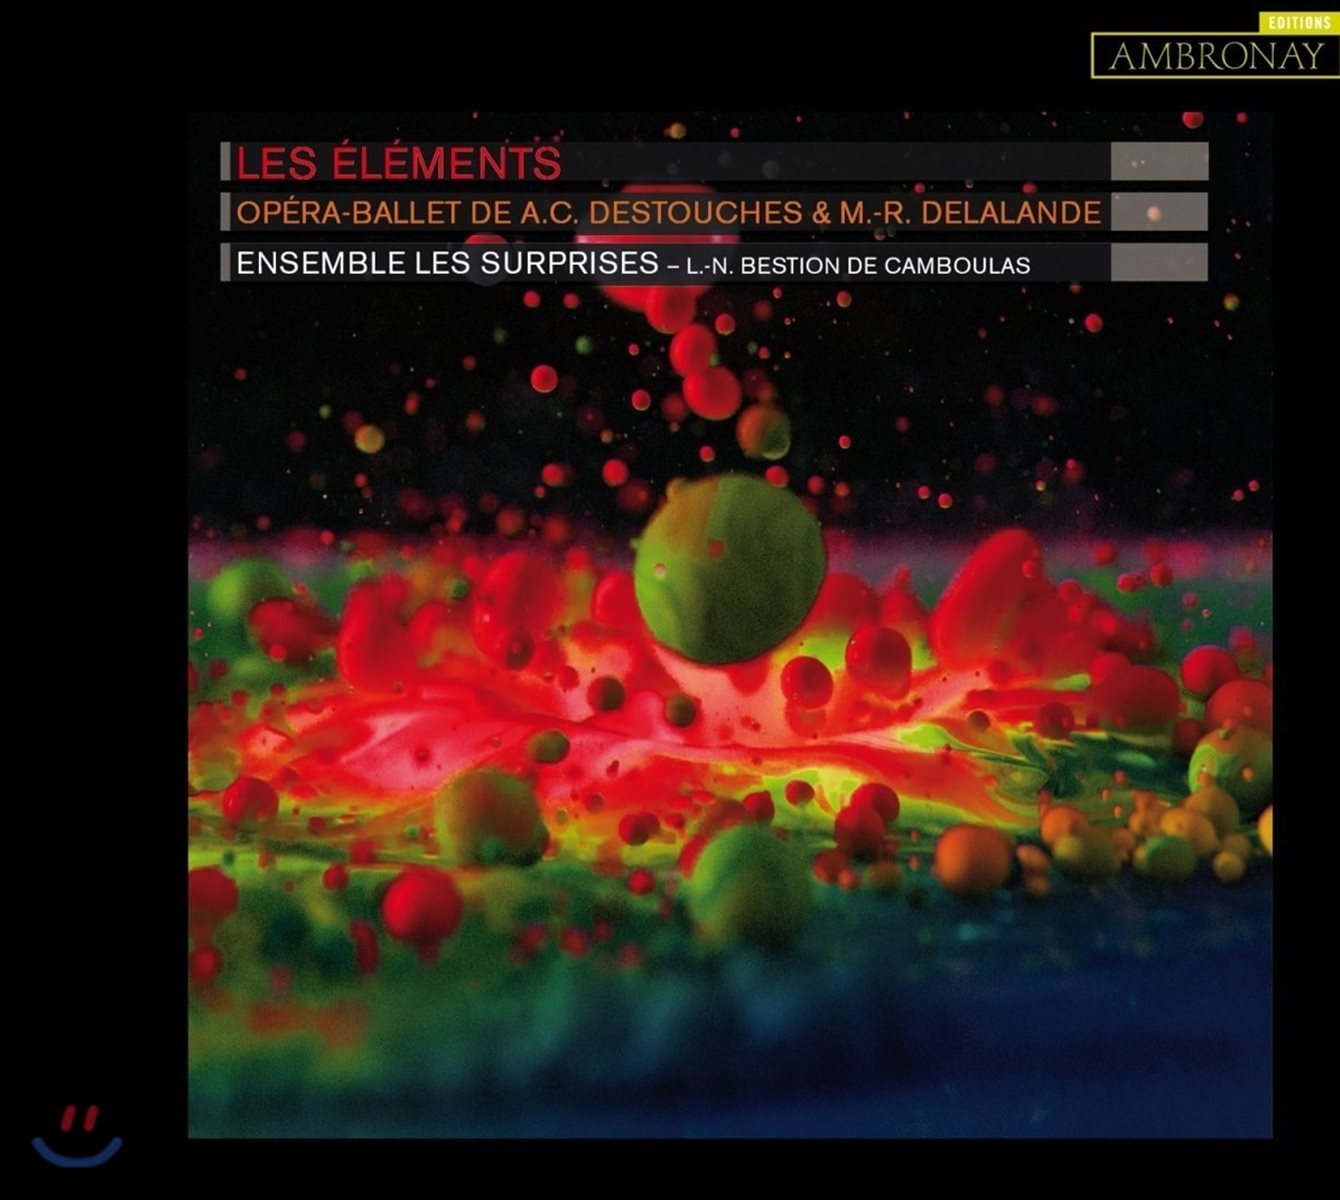 Ensemble Les Surprises 들라랑드 &amp; 데투슈(디스투쉬): 오페라 발레 &#39;레 엘레망 [4대 원소]&#39; - 앙상블 레 쉬프리즈 (Andre Cardinal Destouches &amp; M.-R. Delalande: Opera-Ballet &#39;Les Elements)